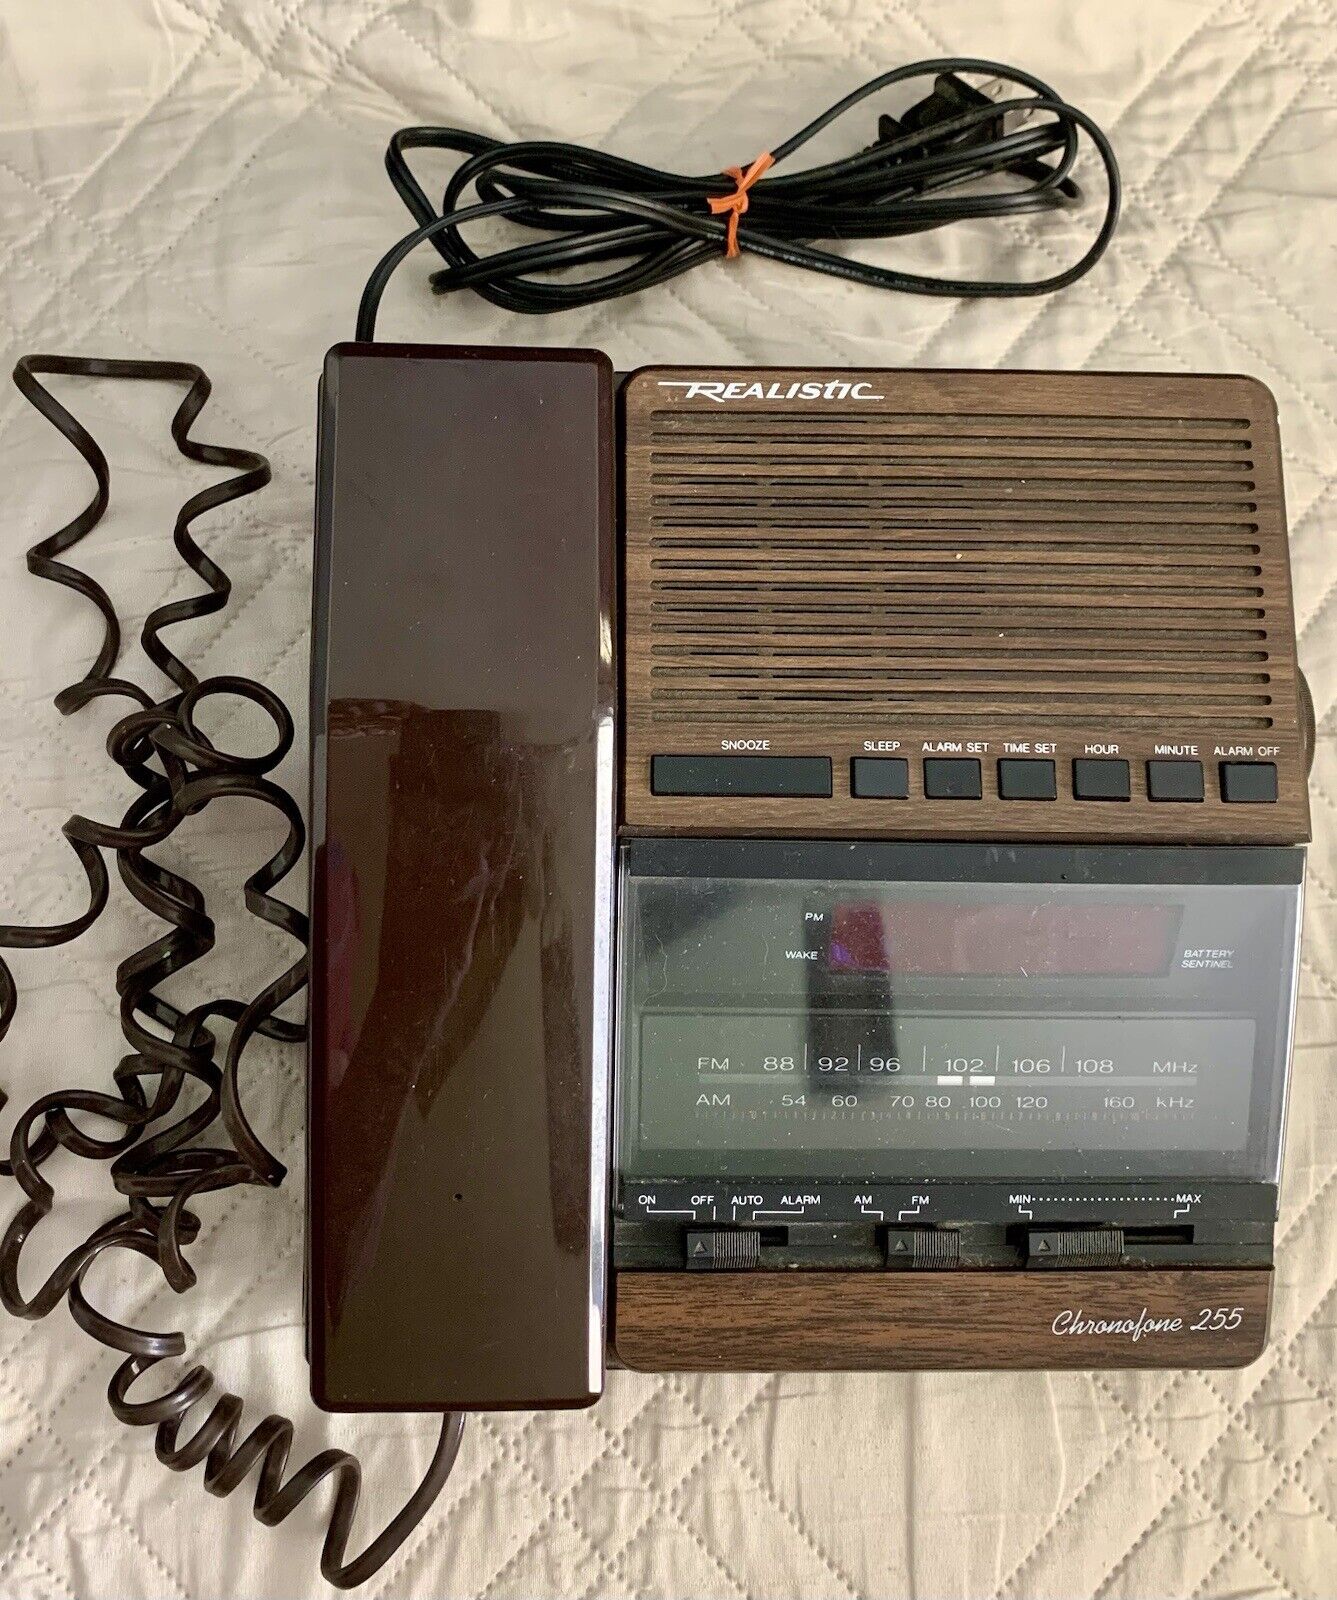 VINTAGE Realistic Chronofone 255 Brown Phone Clock Radio  (Radio & clock work)